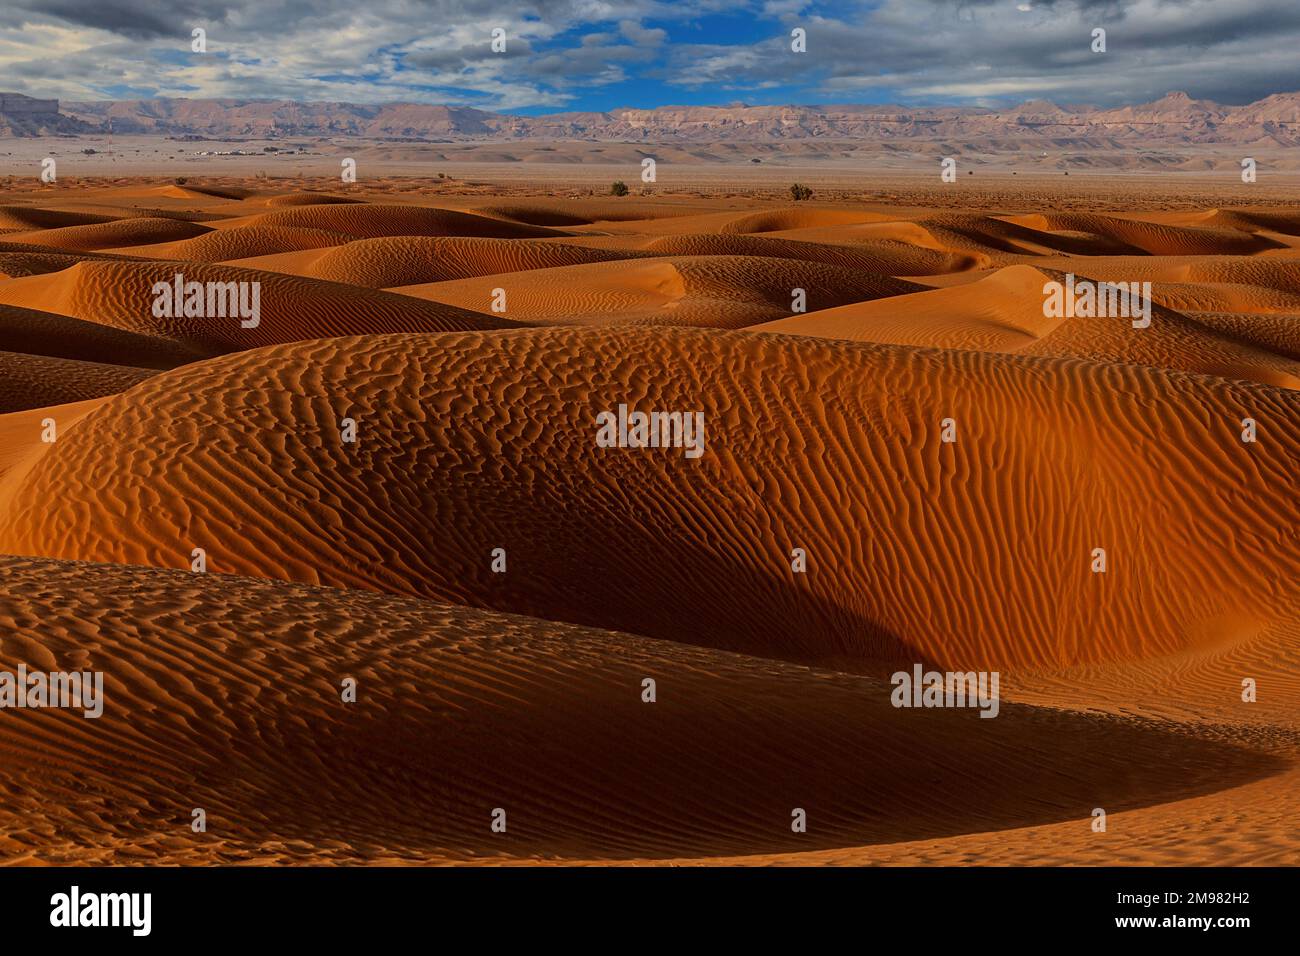 Rippled sand dunes in desert landscape with mountain backdrop, Saudi Arabia Stock Photo